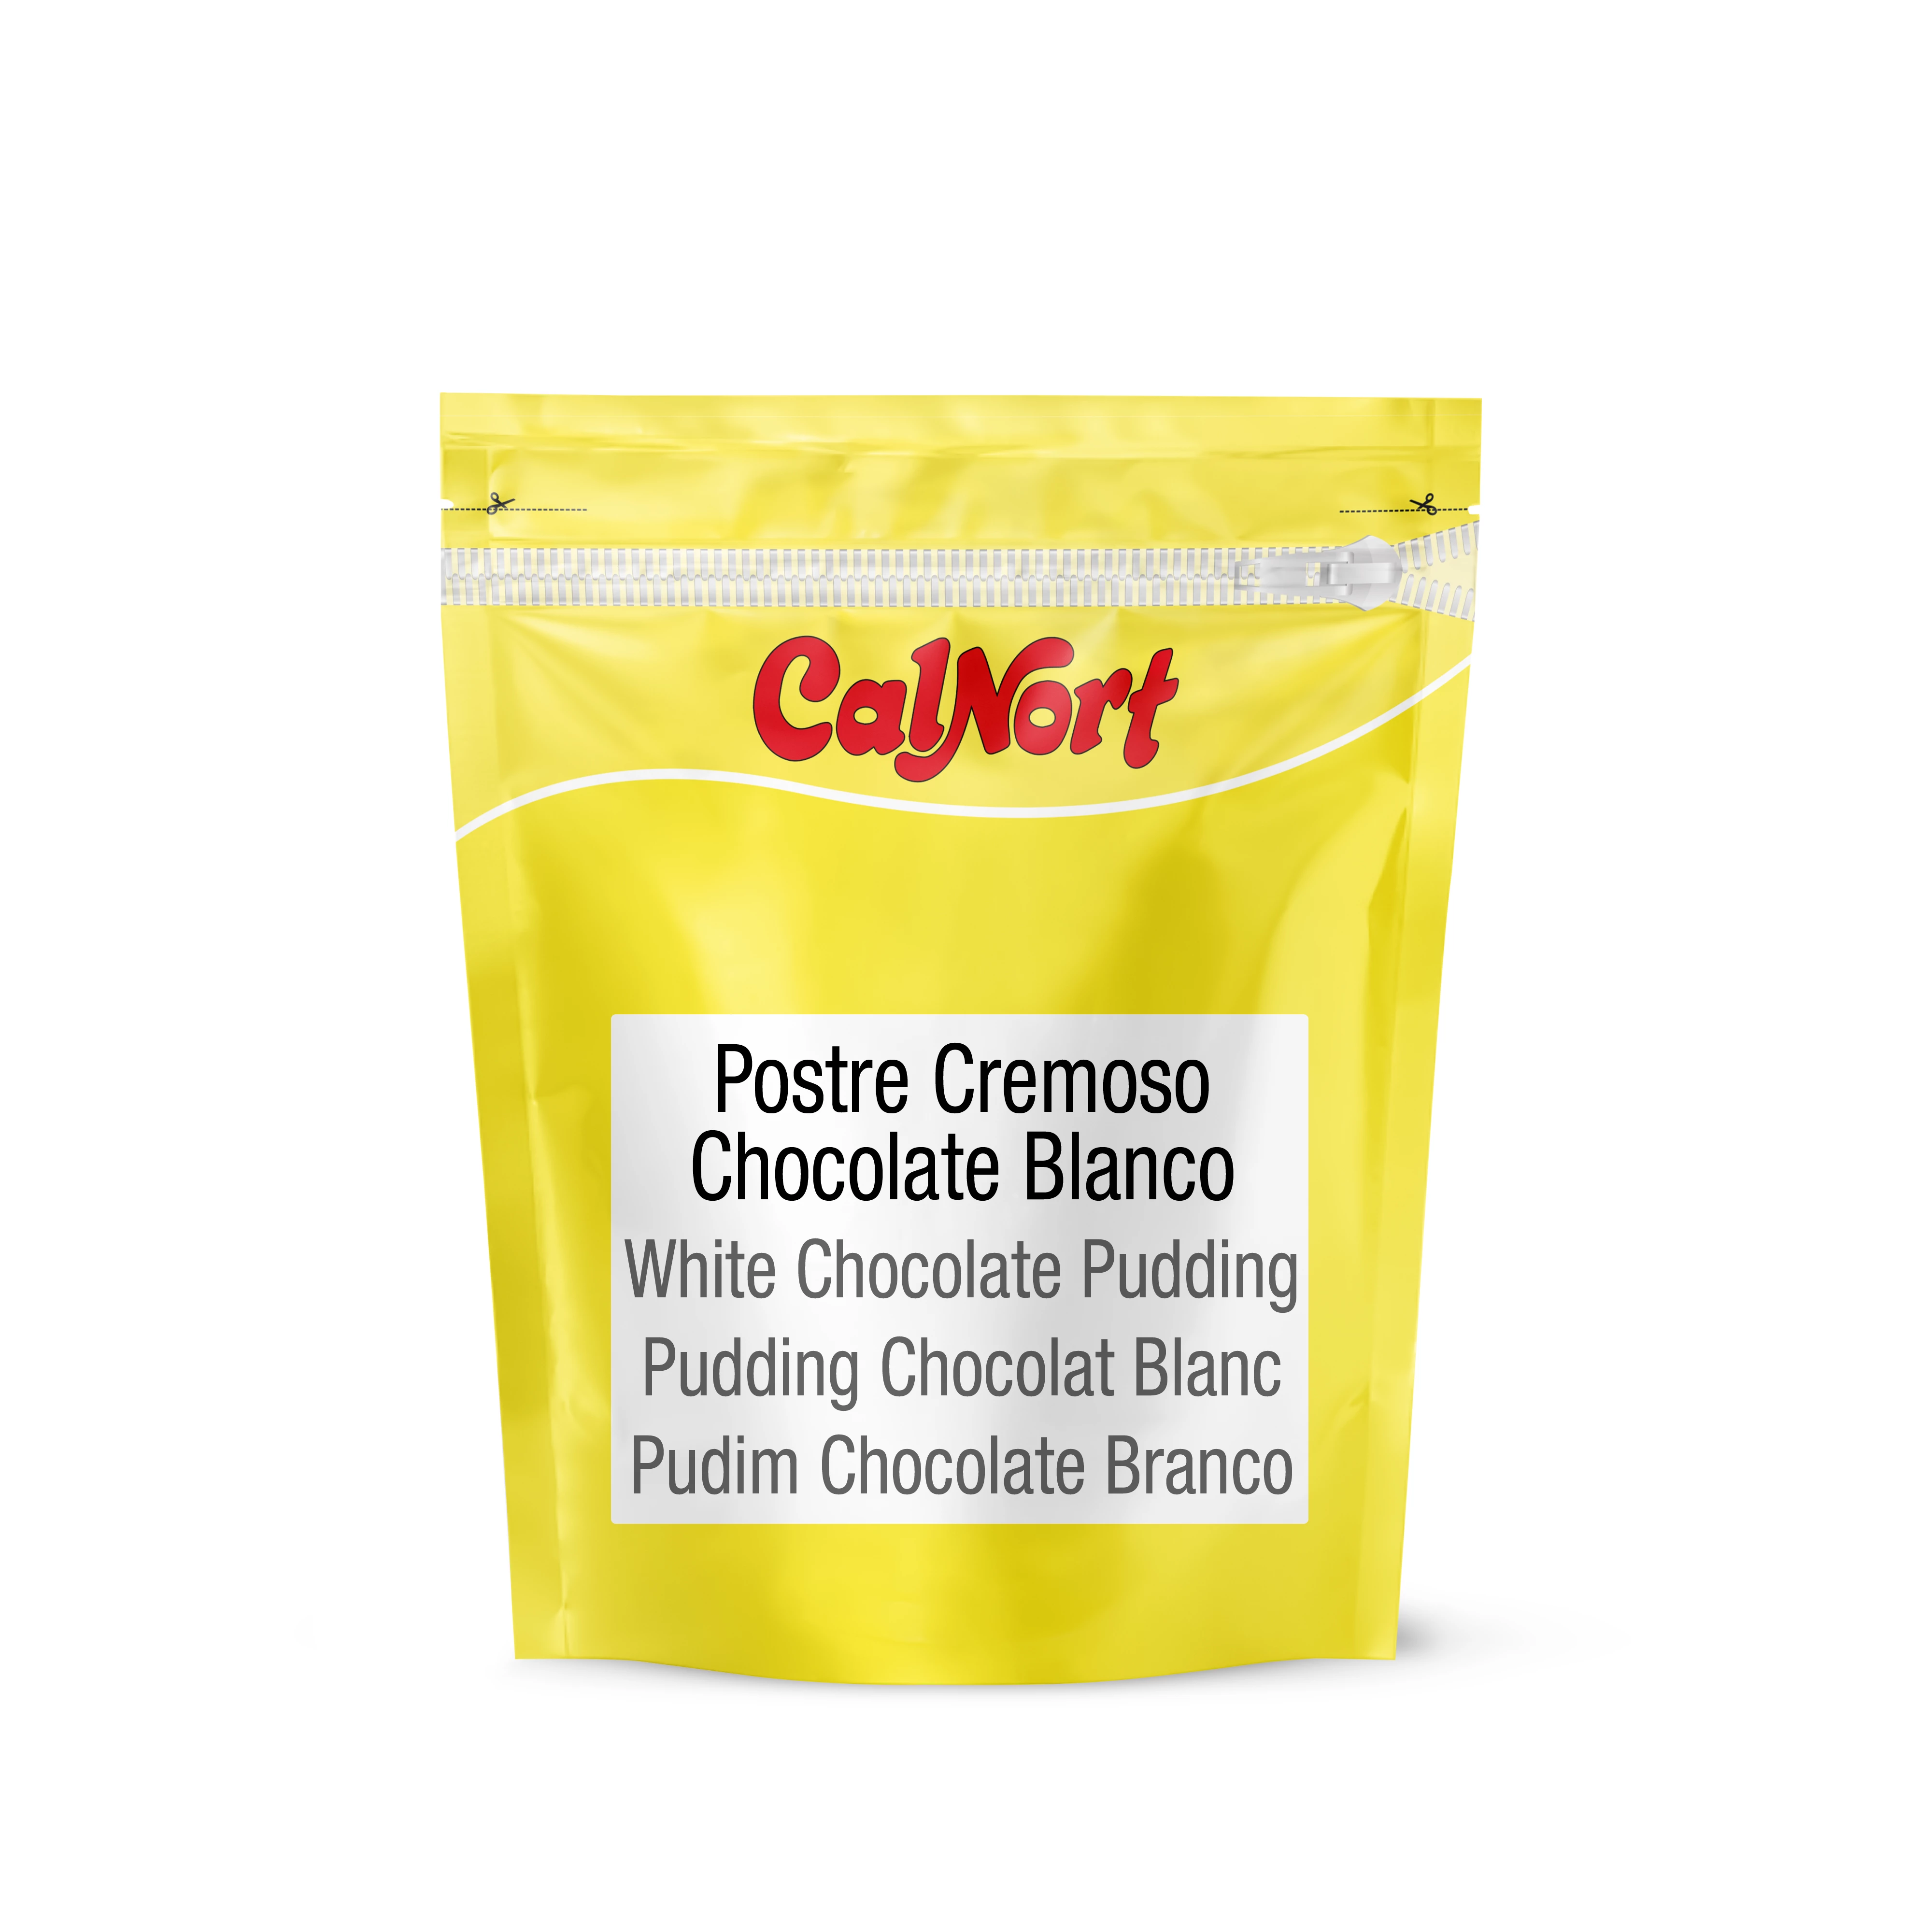 白巧克力布丁1公斤 - CALNORT